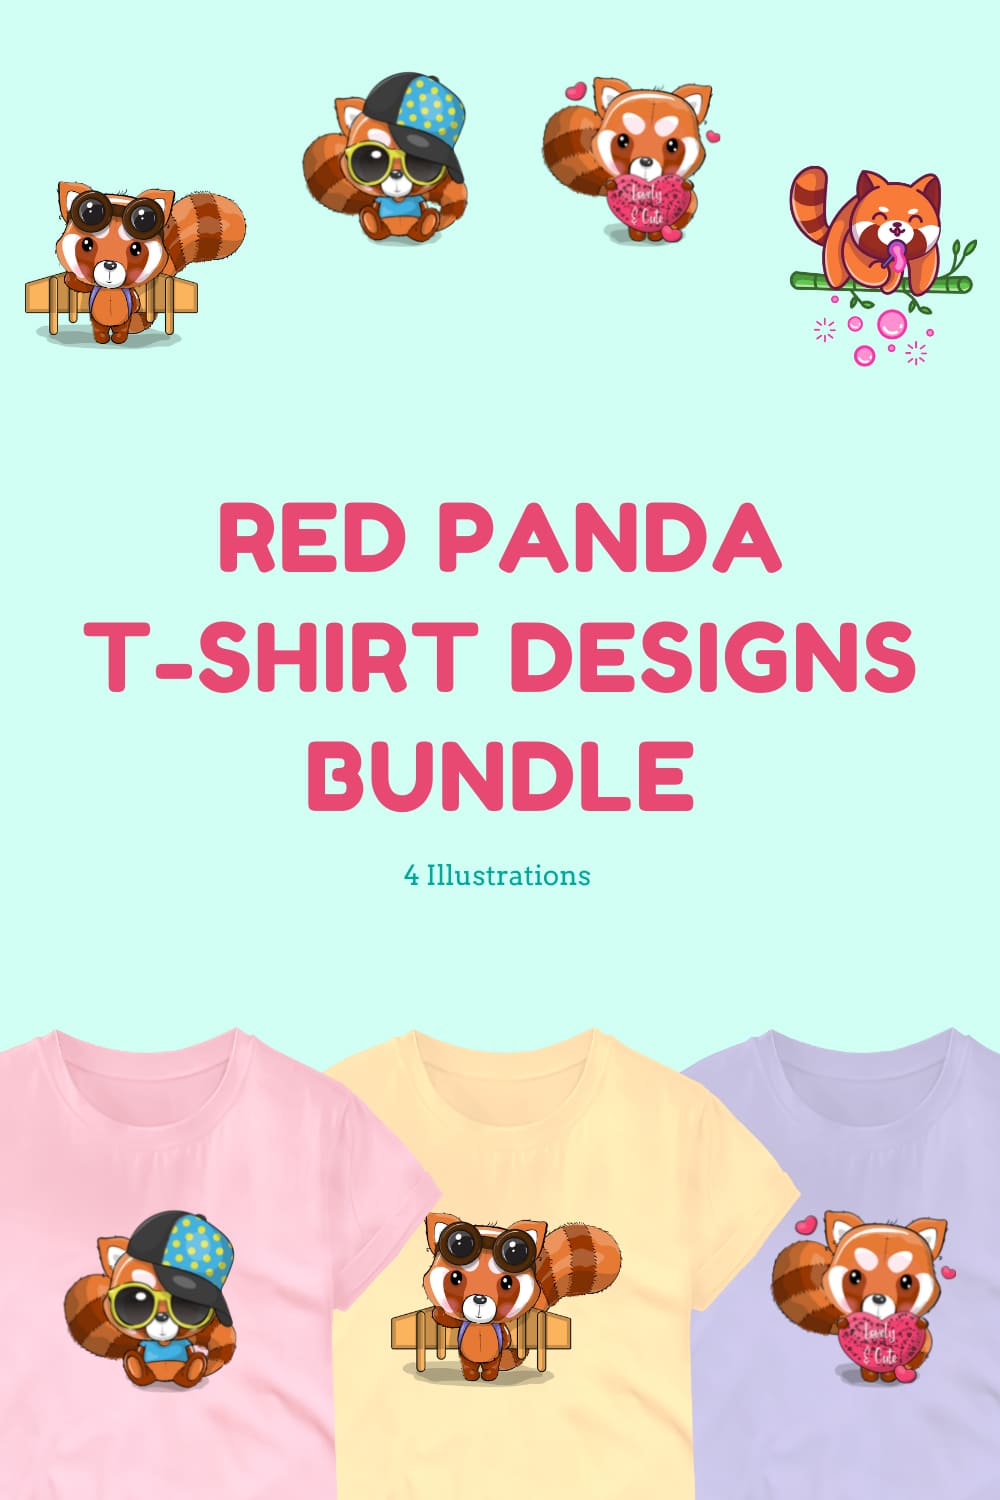 Red Panda Svg T-shirt Designs Bundle - Pinterest.